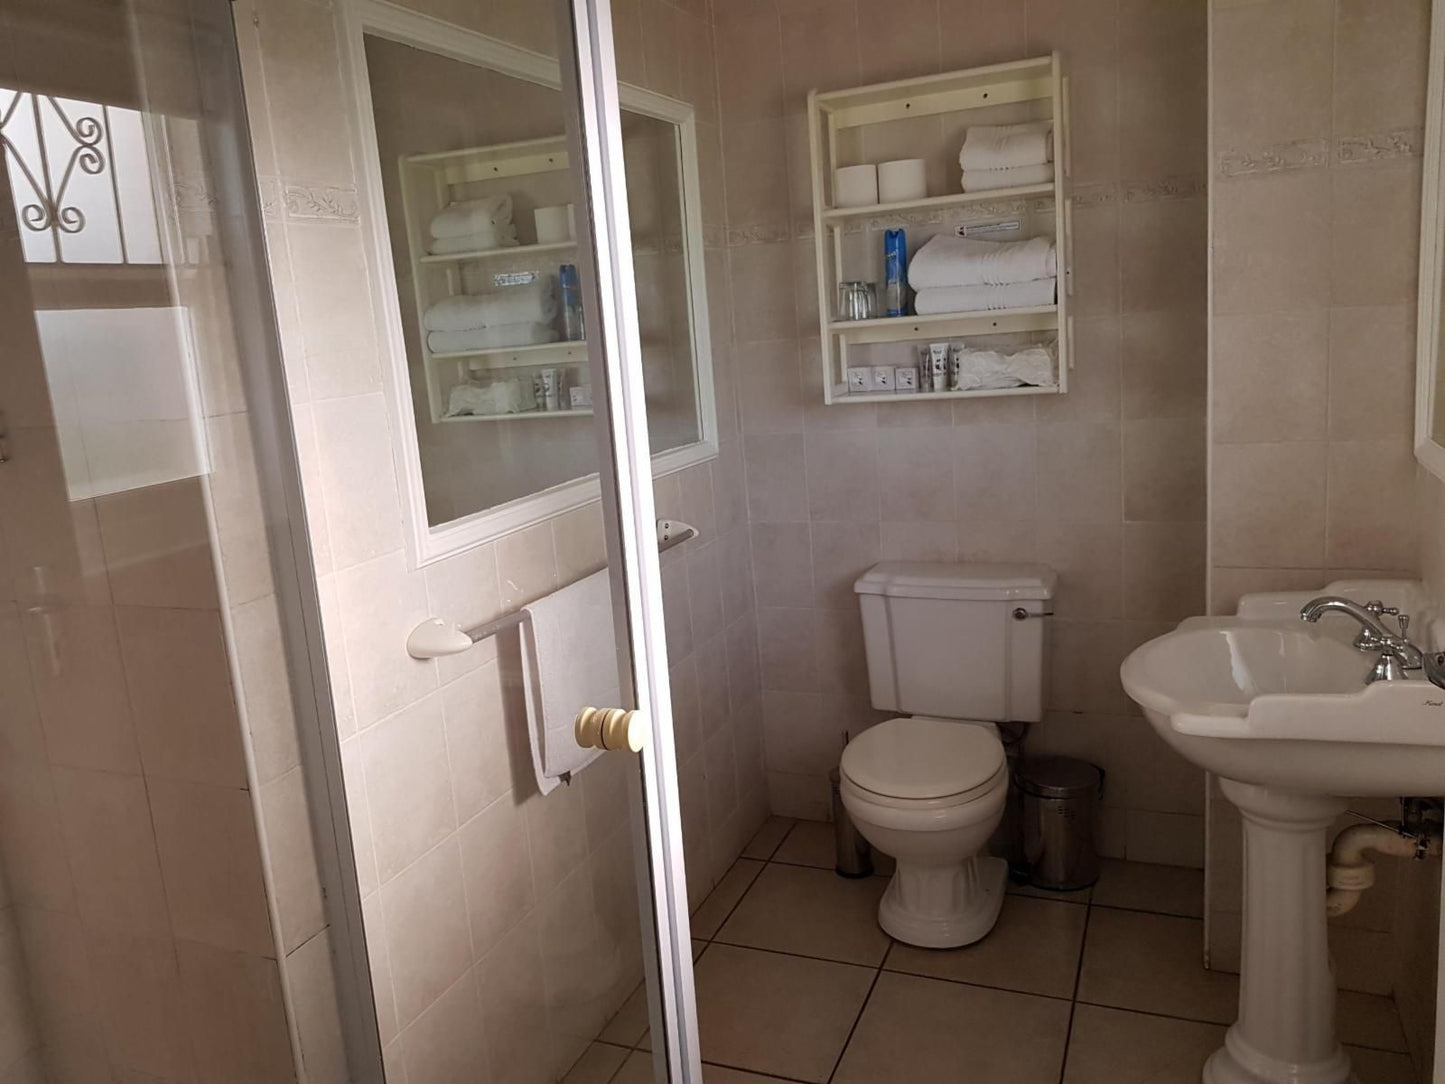 Sica S Guest House Westridge Durban Kwazulu Natal South Africa Bathroom